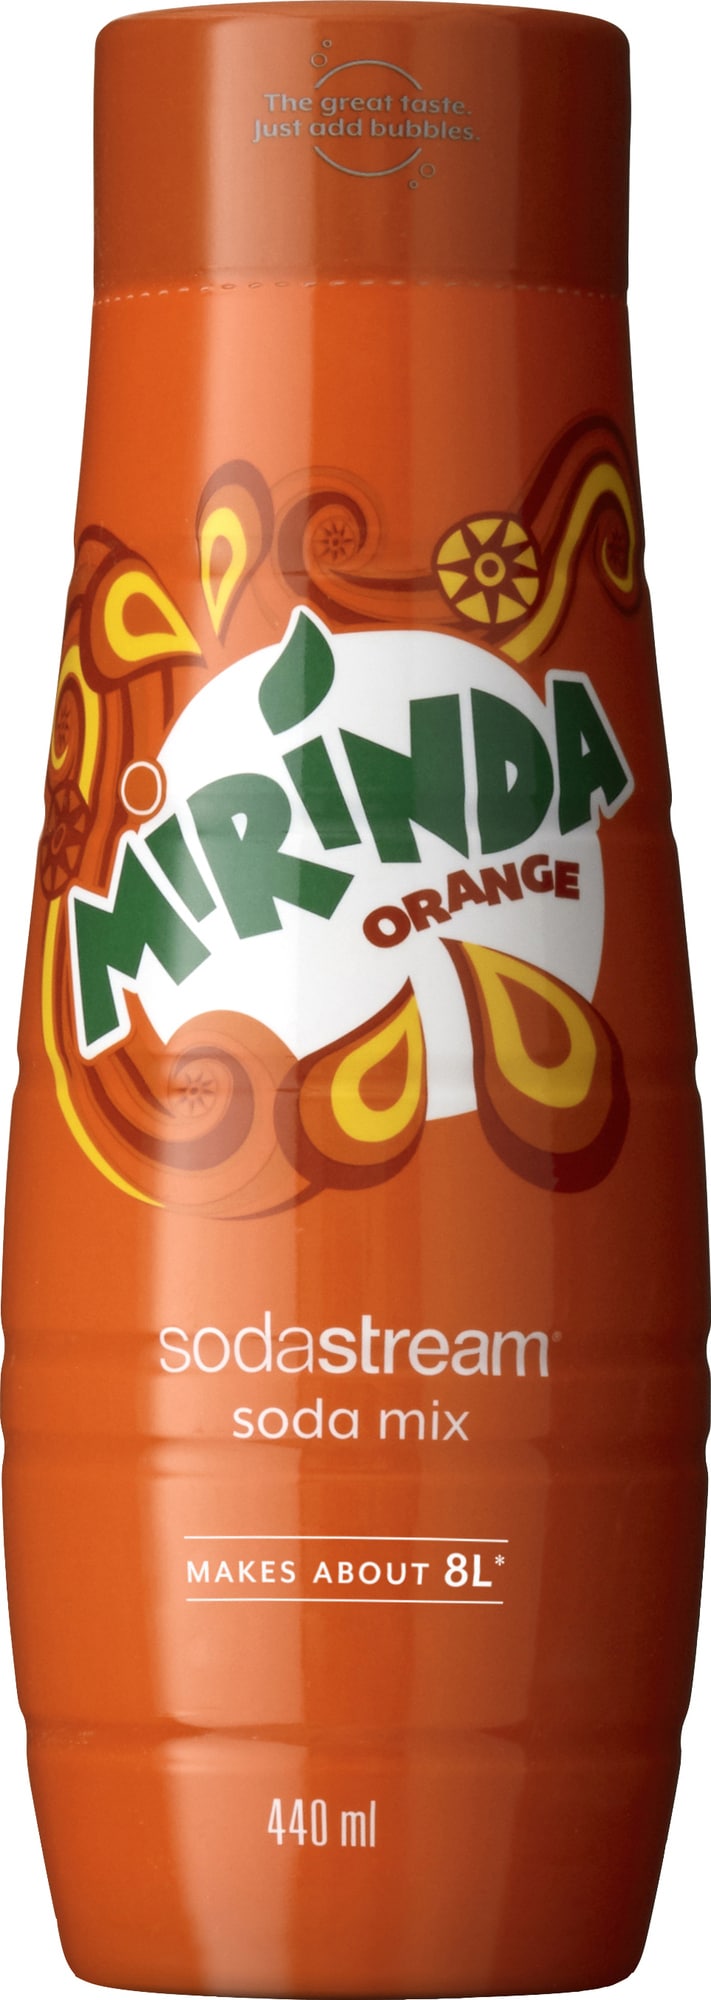 Sodastream Mirinda Orange smag 1100009770 thumbnail